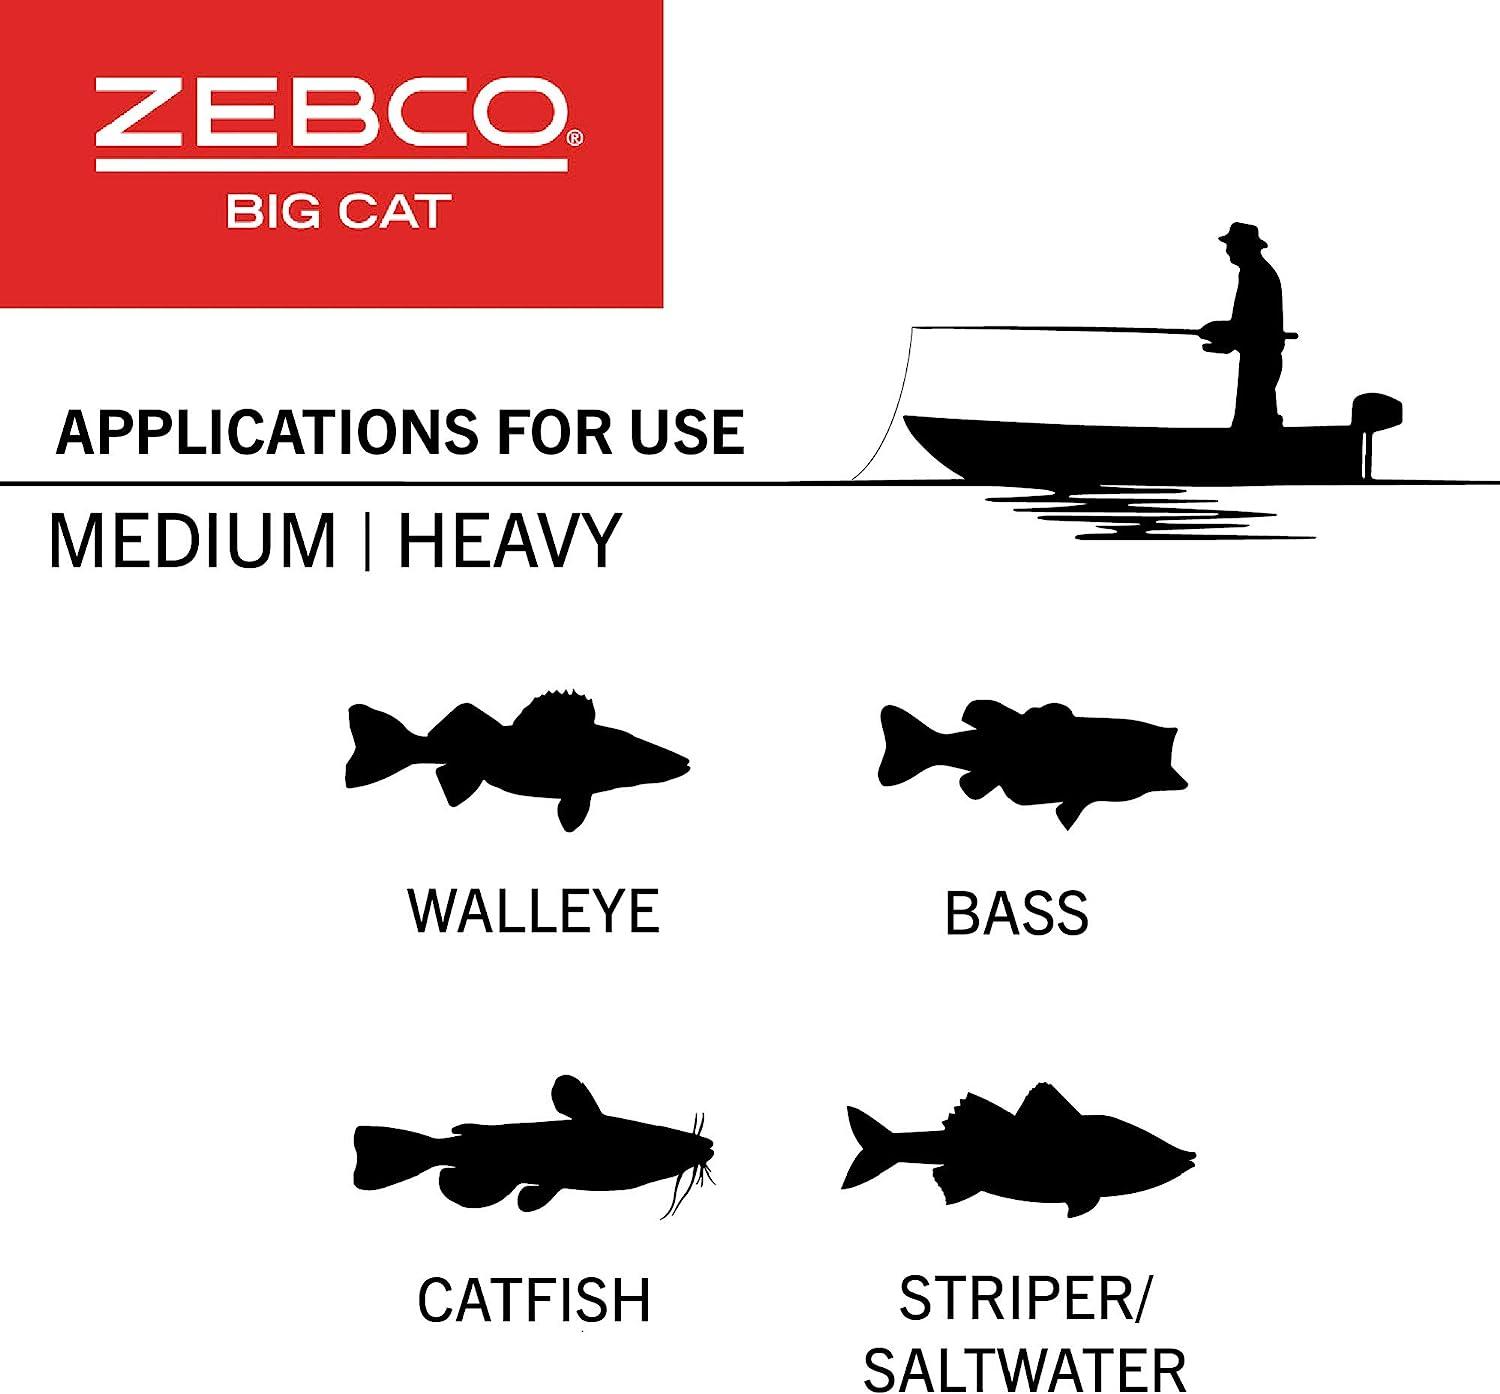 Zebco Big Cat Casting Fishing Rod, 7-Foot 2-Piece Fiberglass